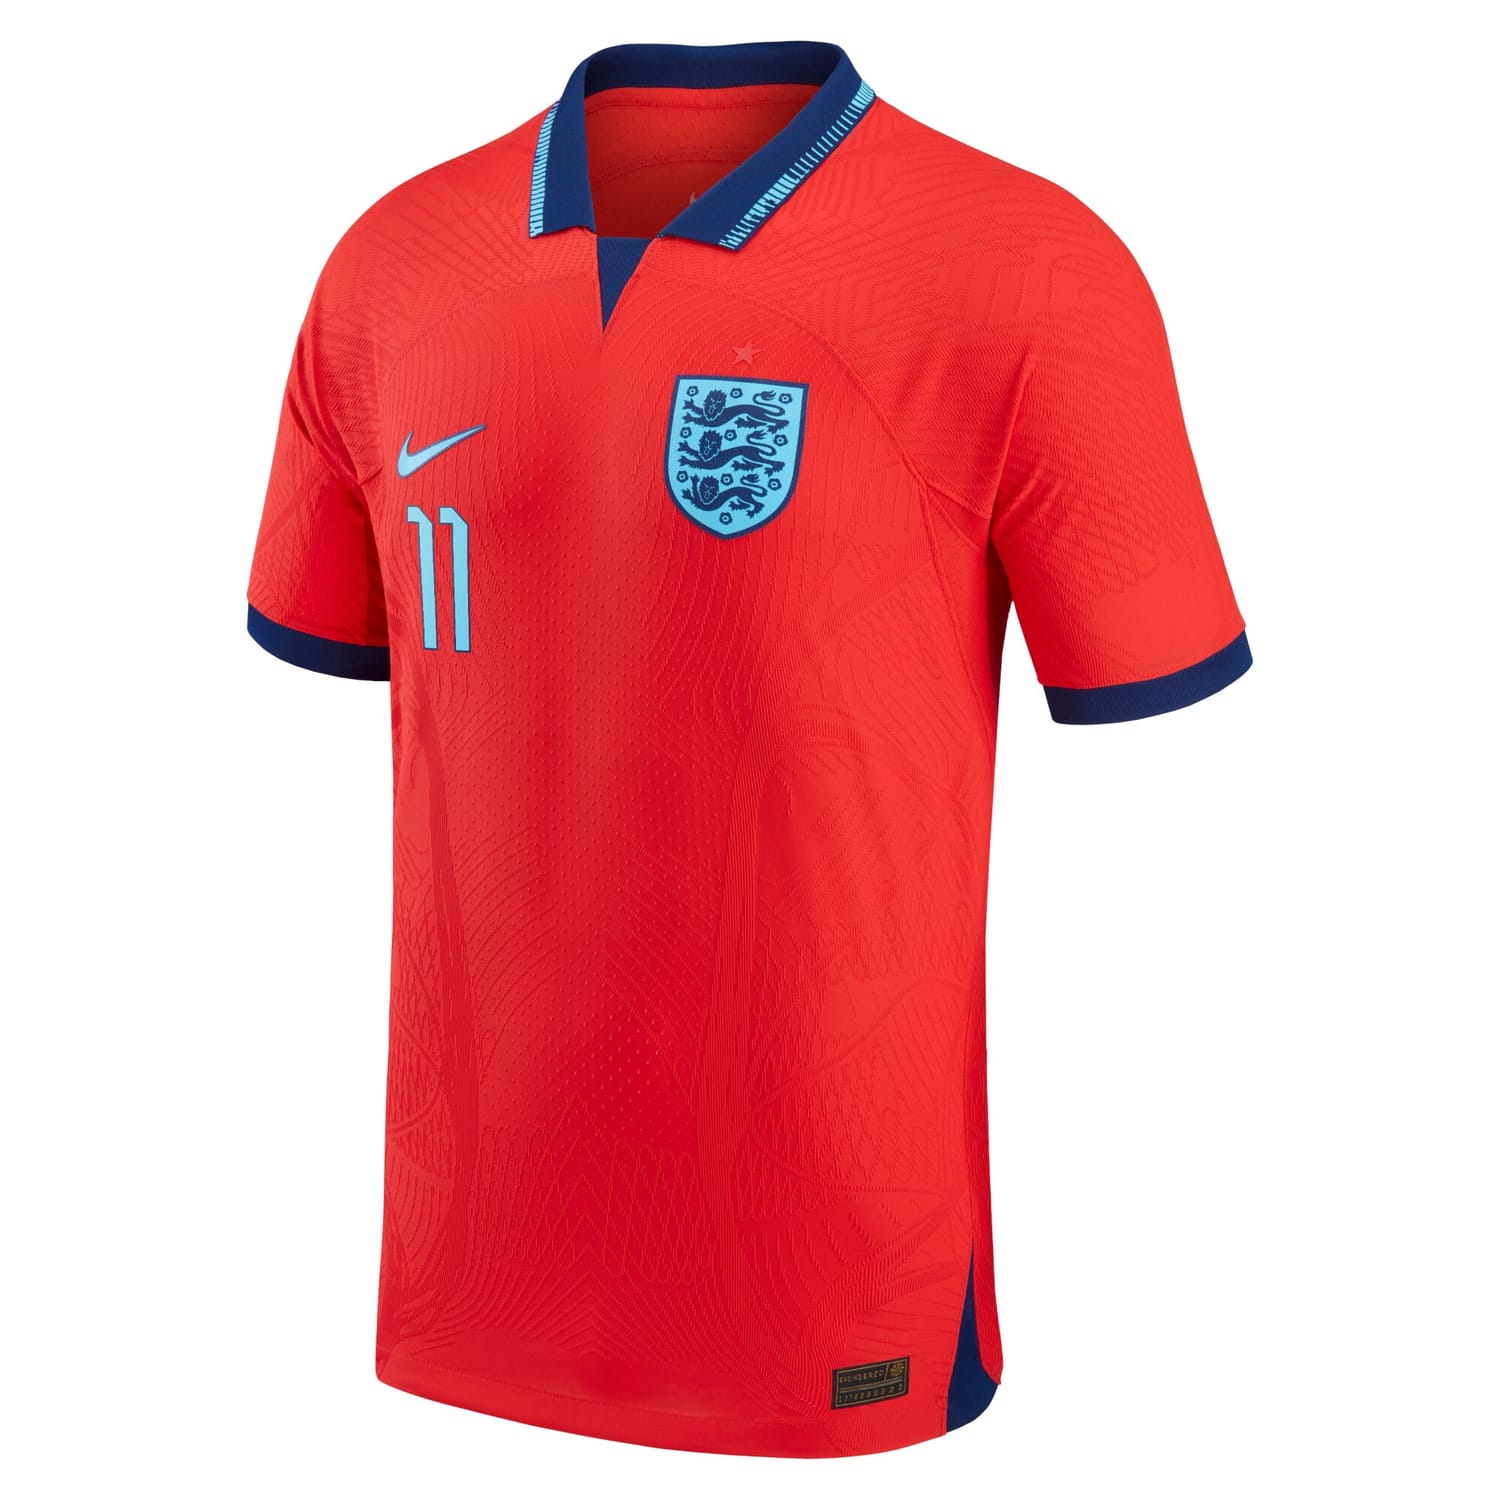 England National Team Away Authentic Jersey Shirt 2022 player Marcus Rashford 11 printing for Men